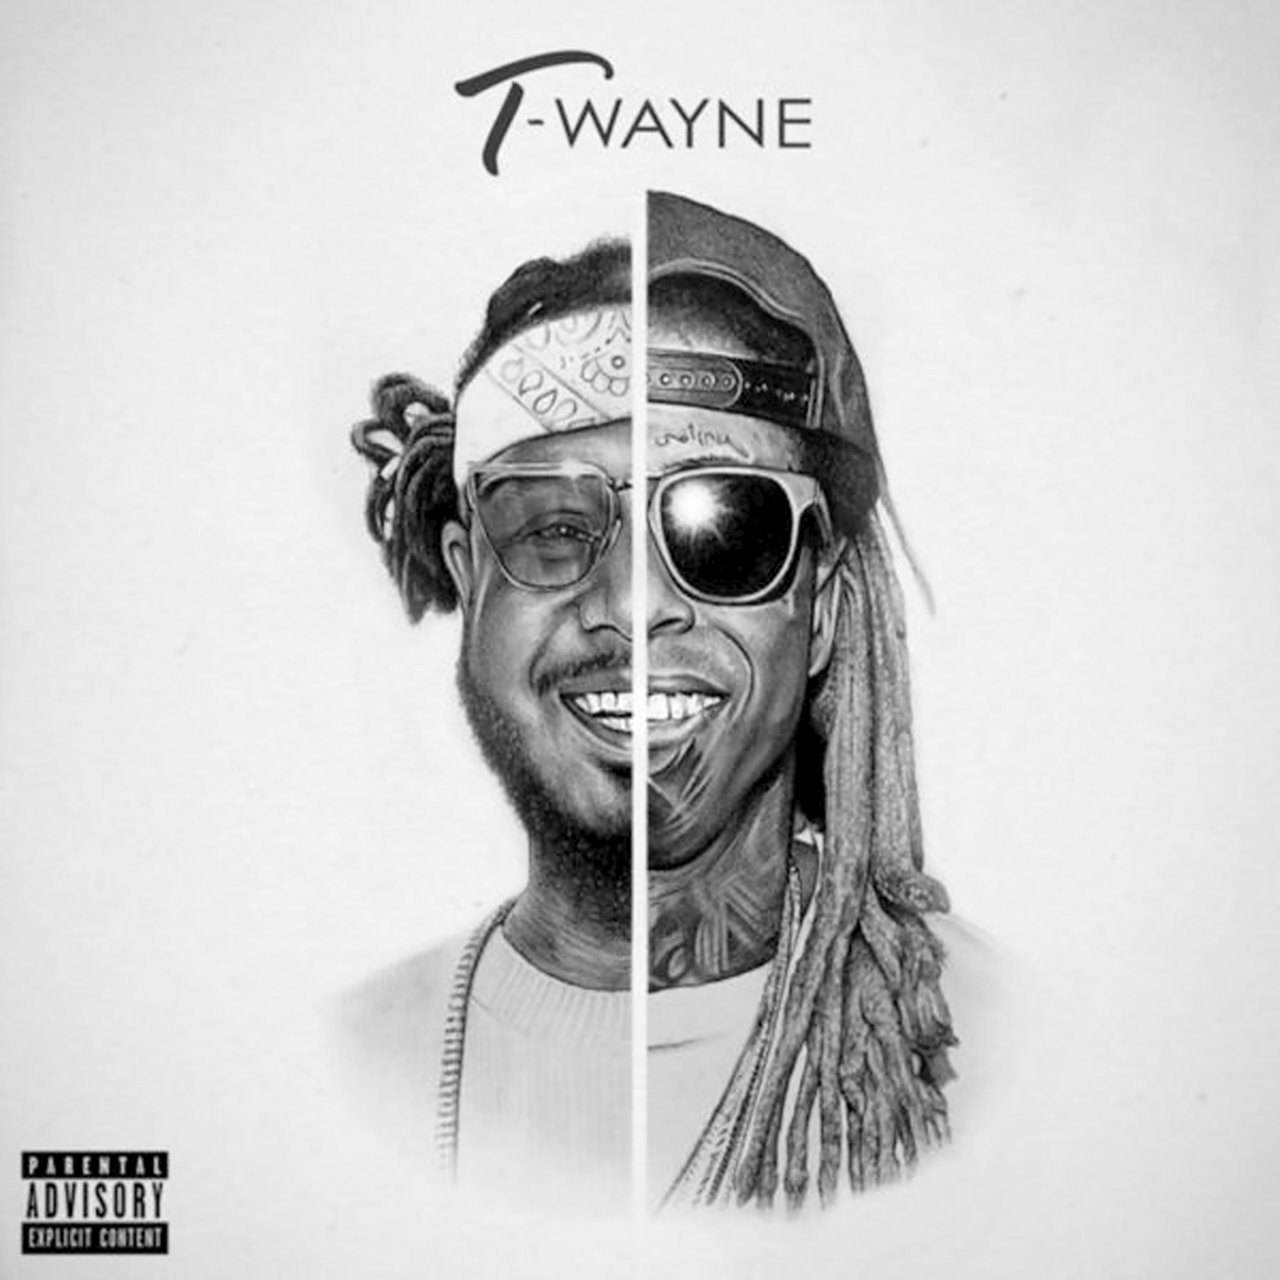 Lil Wayne and T-Pain - T-Wayne (Cover)